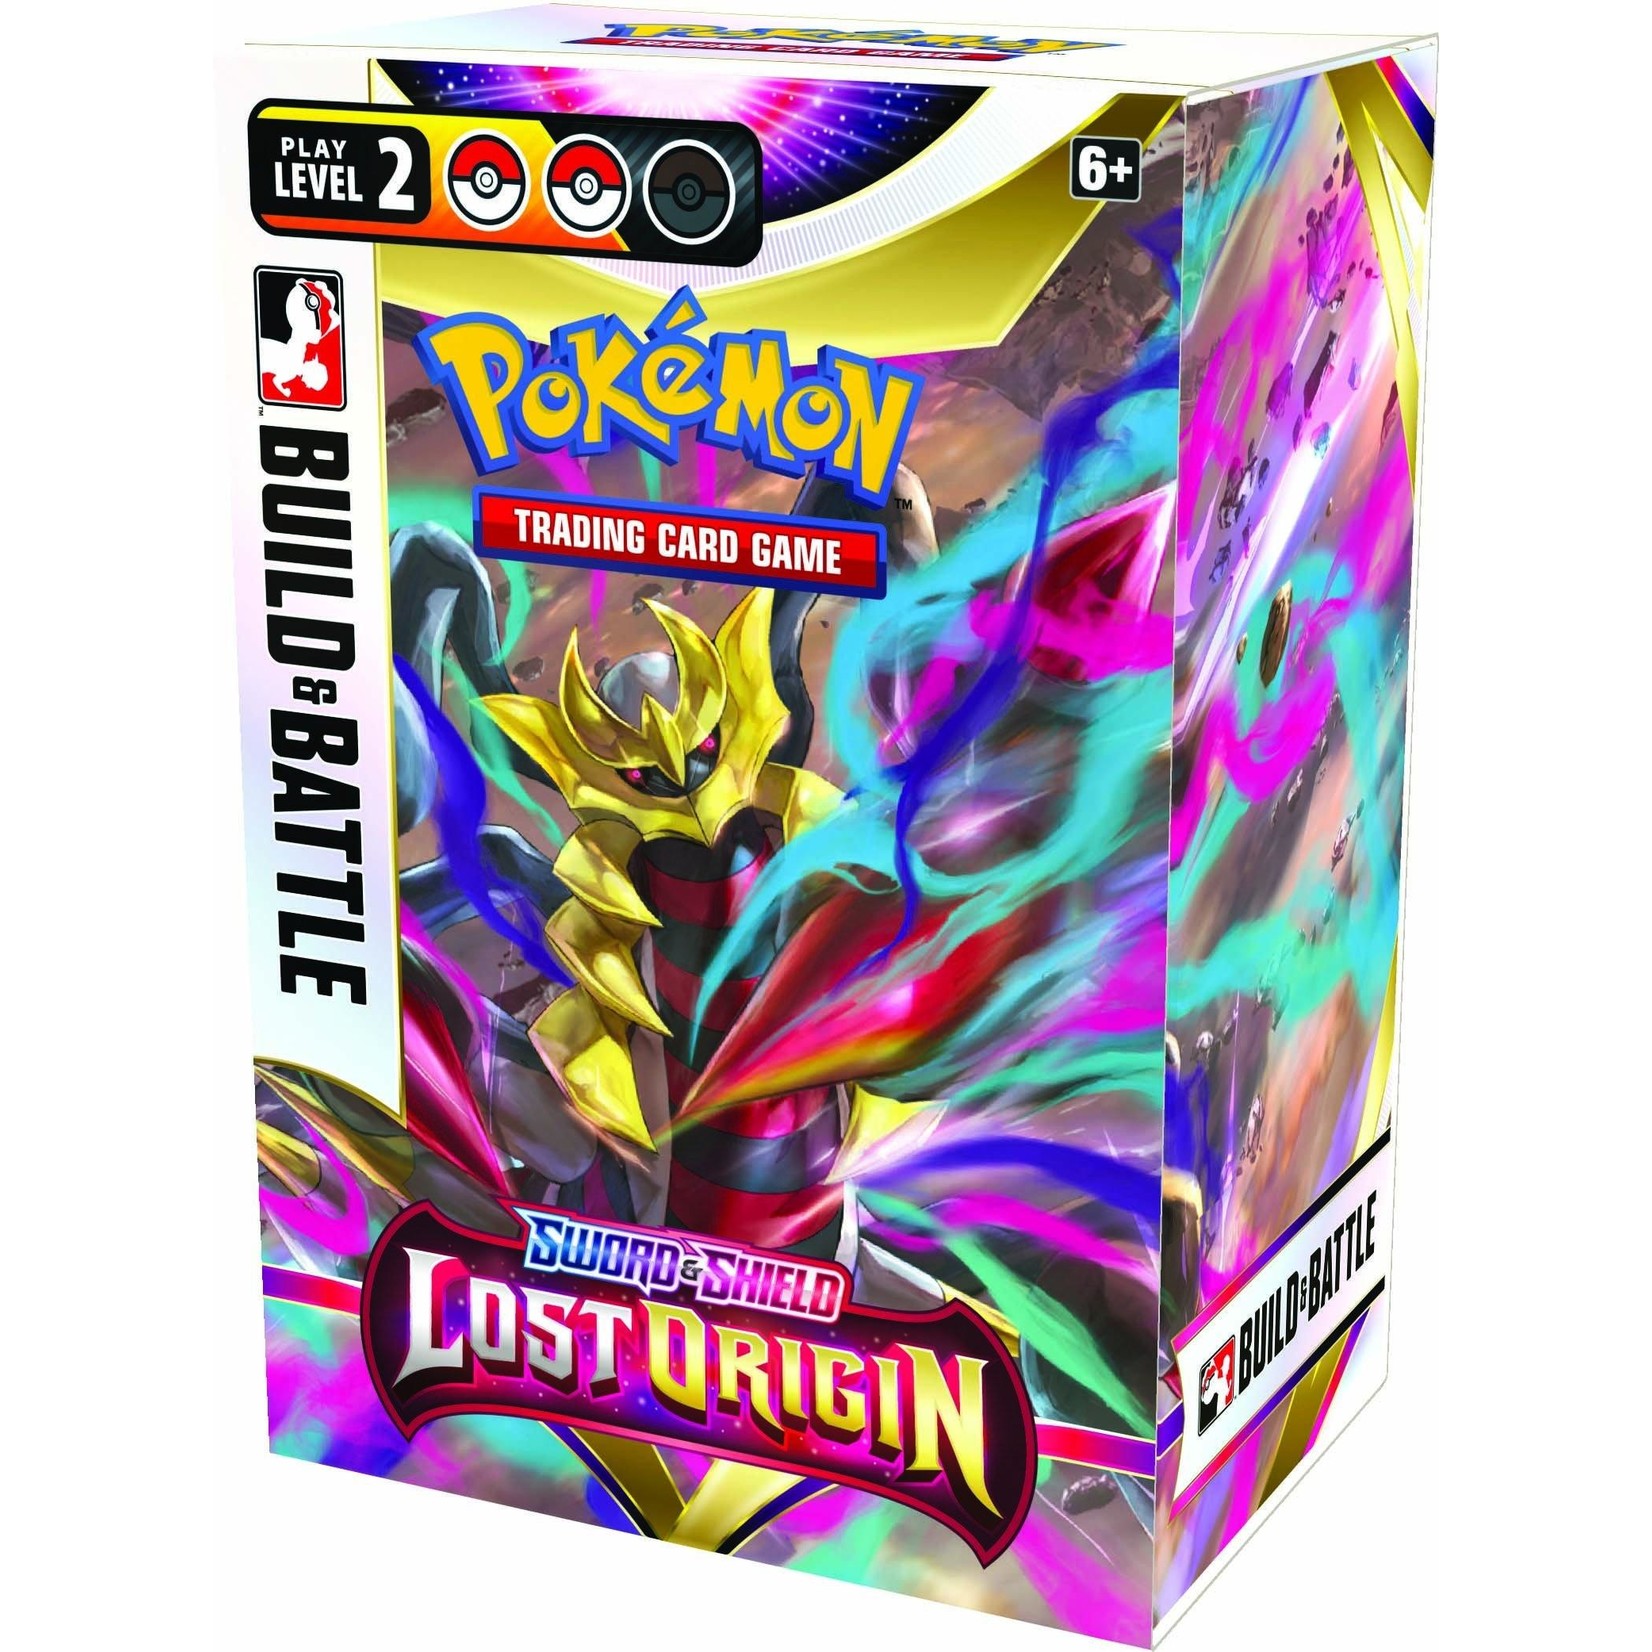 Pokémon Pokemon TCG: Lost Origin Build & Battle Box